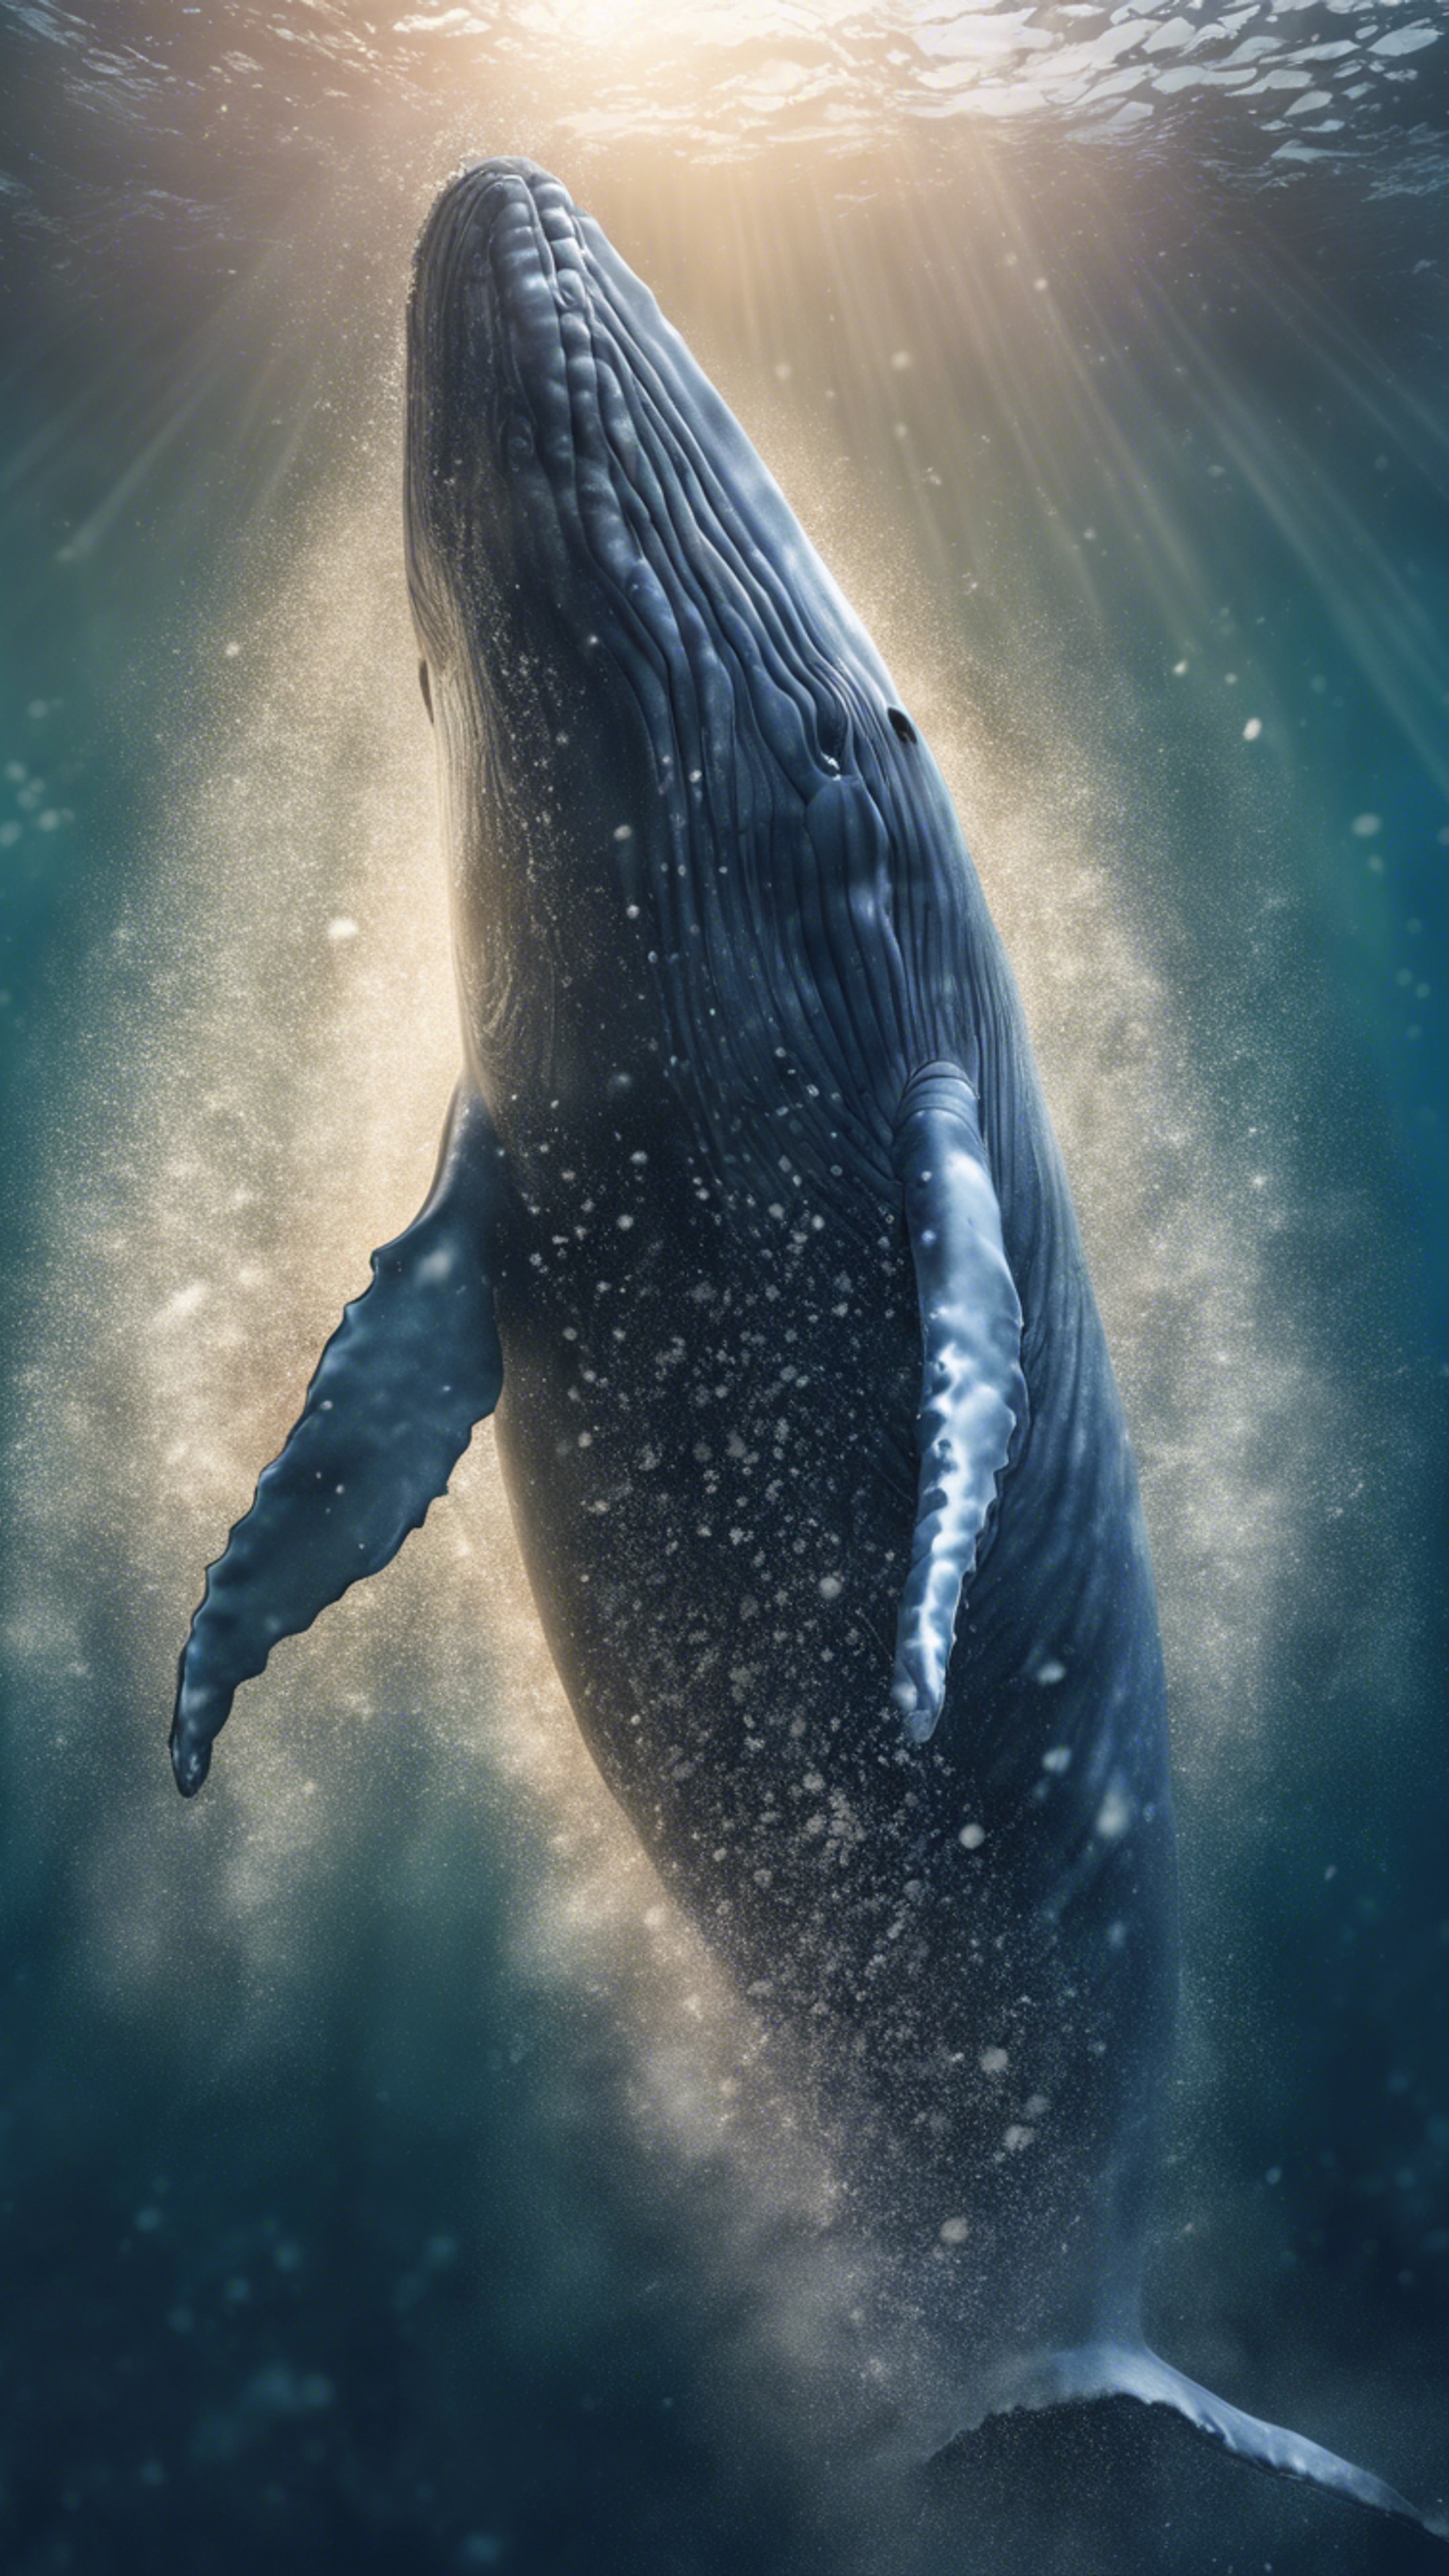 A digital portrait of a majestic sperm whale deep below the ocean waves. Tapéta[e5d10afbe32a416ca5b5]